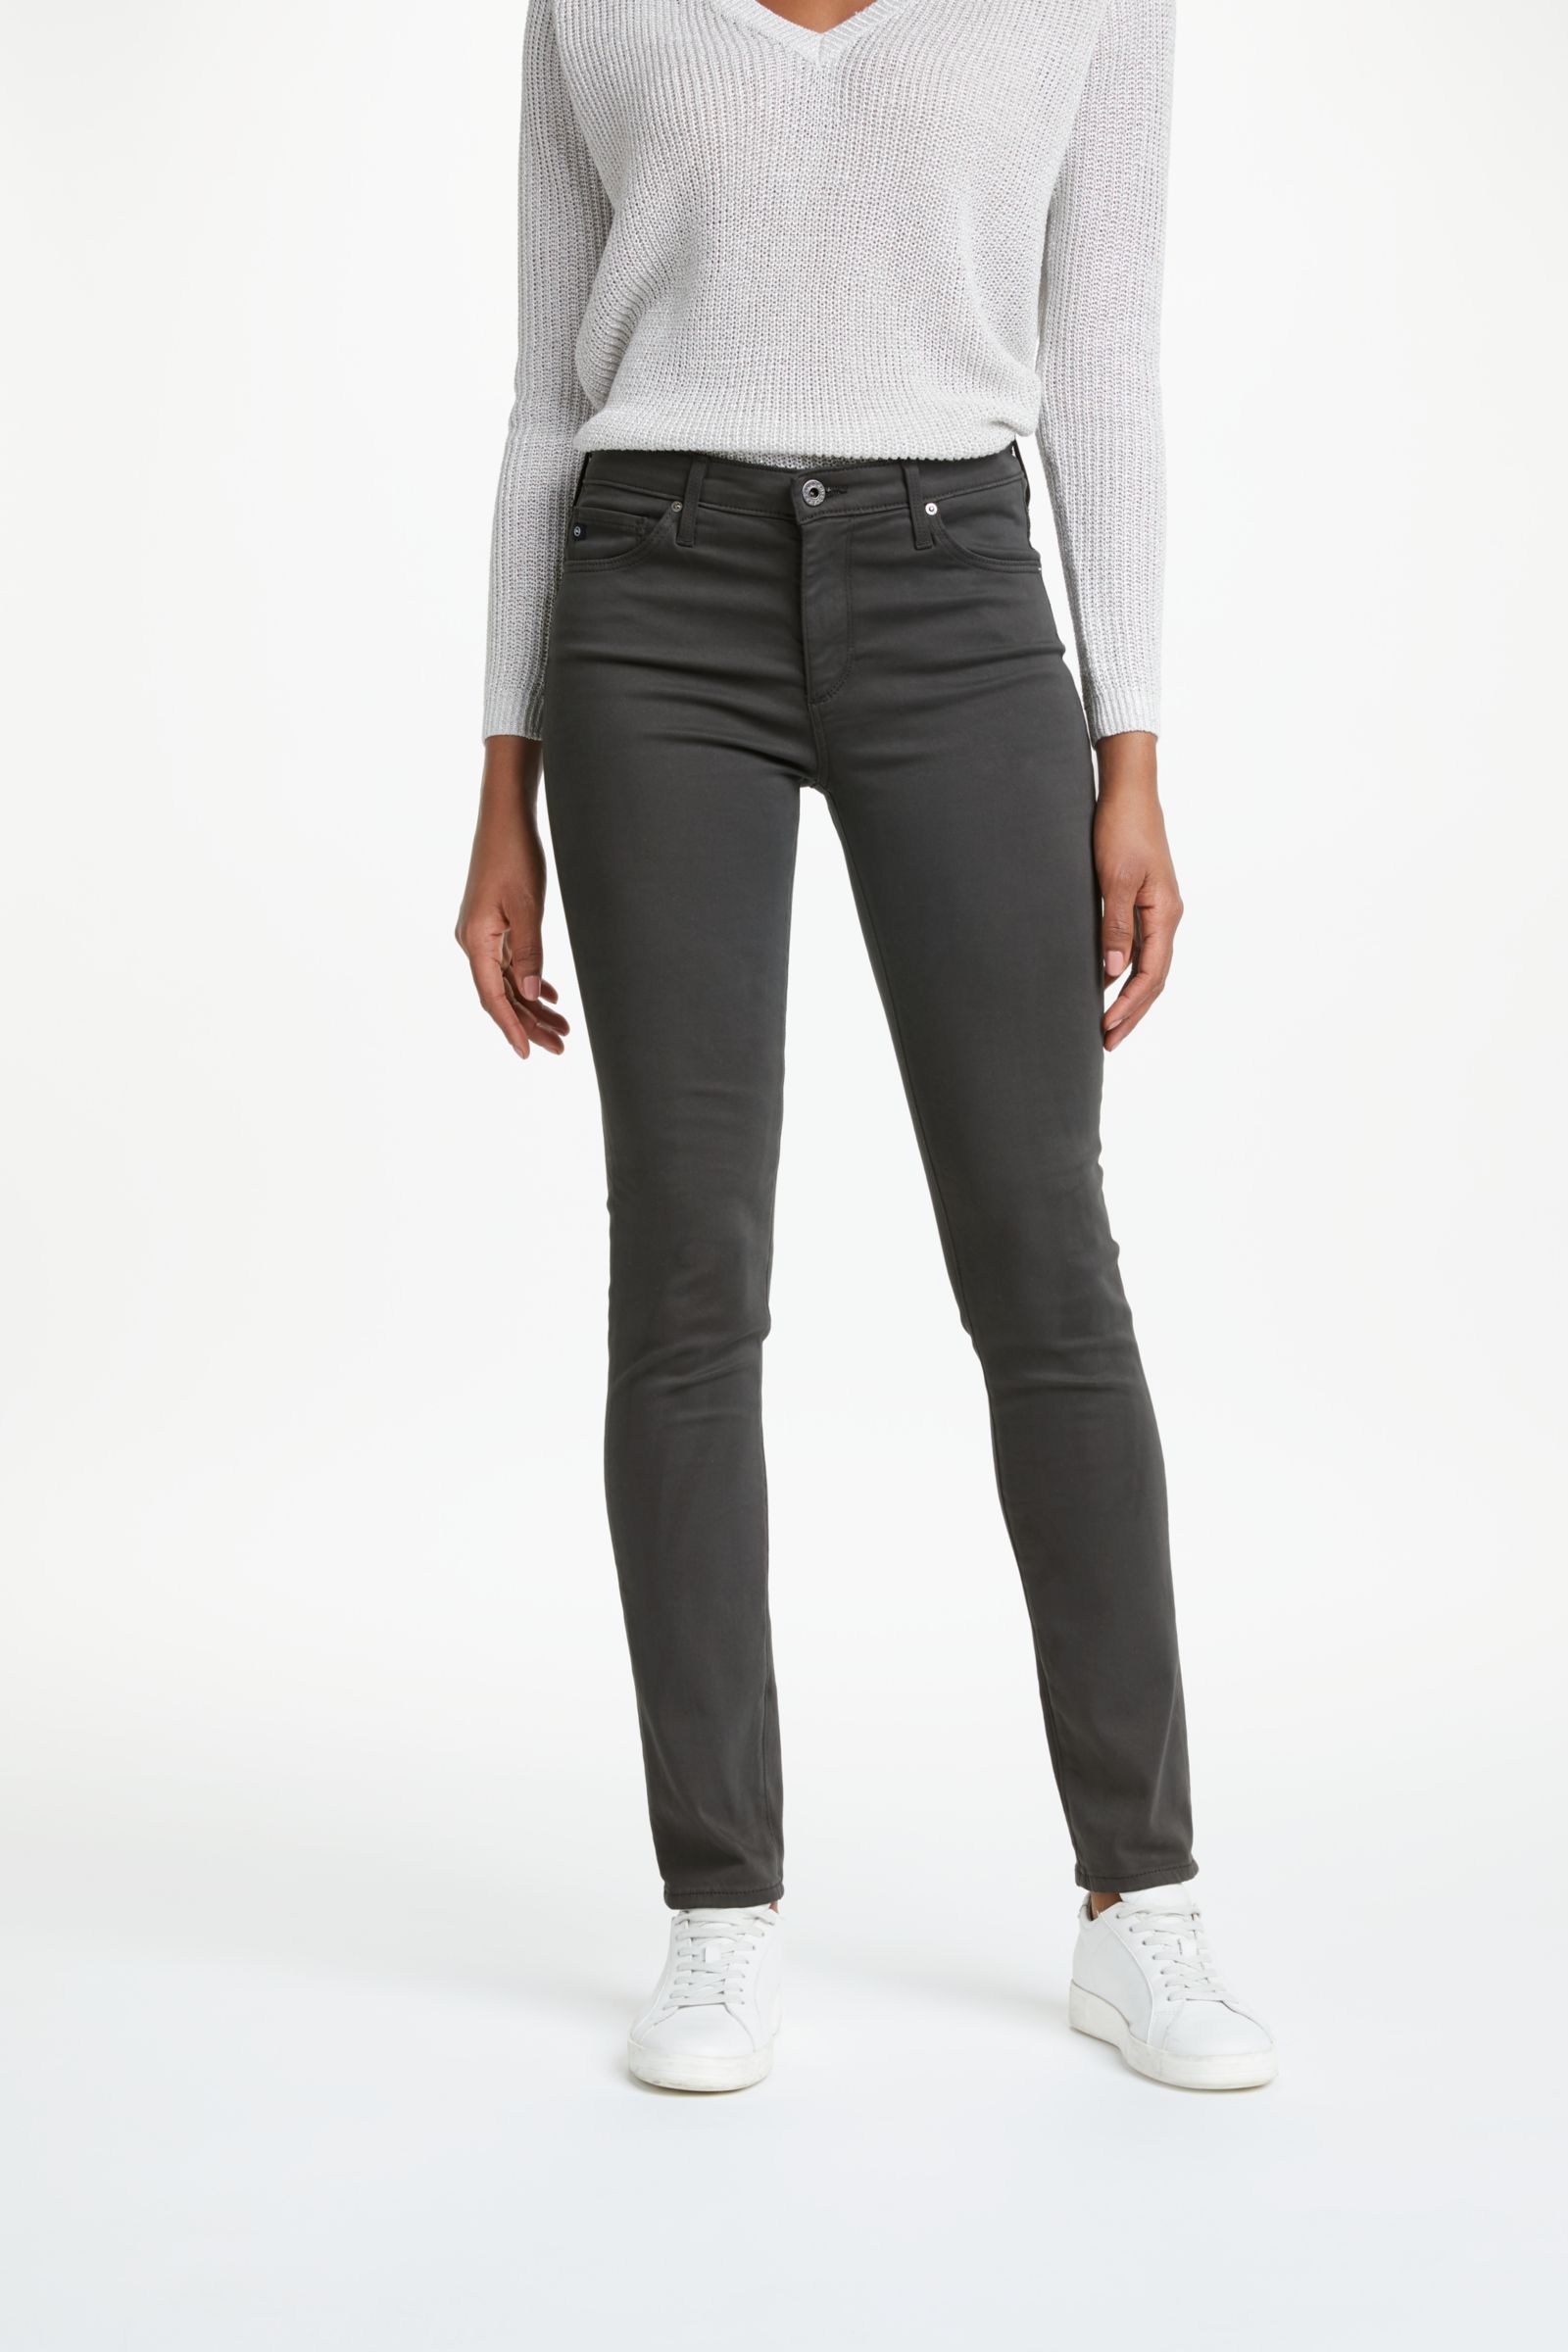 AG The Prima Mid Skinny Jeans, Cavern Grey 30 female 59% Cotton, 31% Modal, 8% Polyester, 2% Elastane